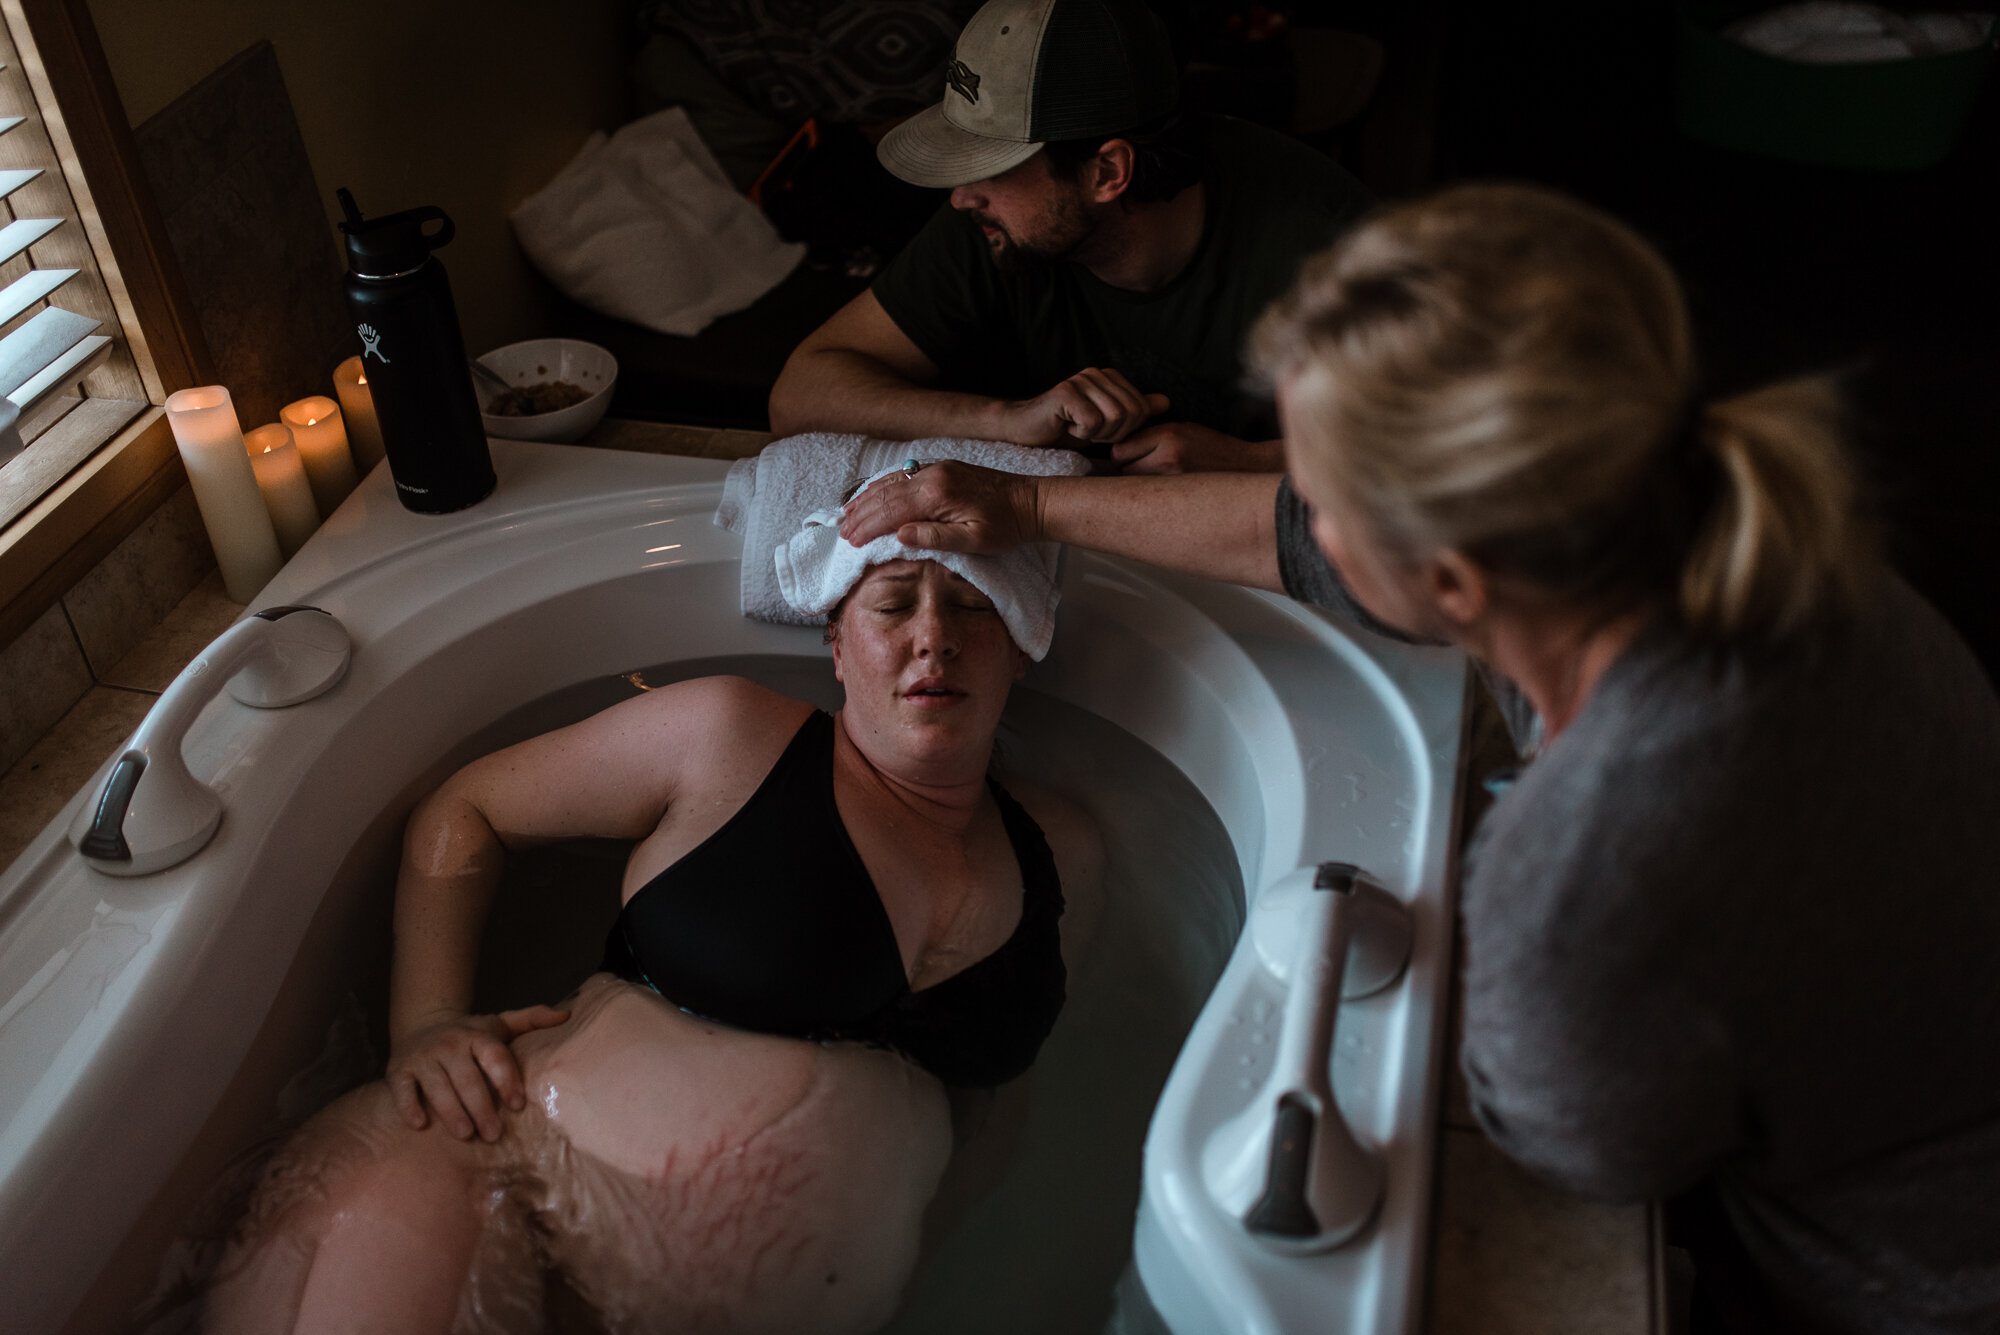 Meredith+Westin+Photography-+Minnesota+Birth+Stories-March+27,+2019-080519.jpg